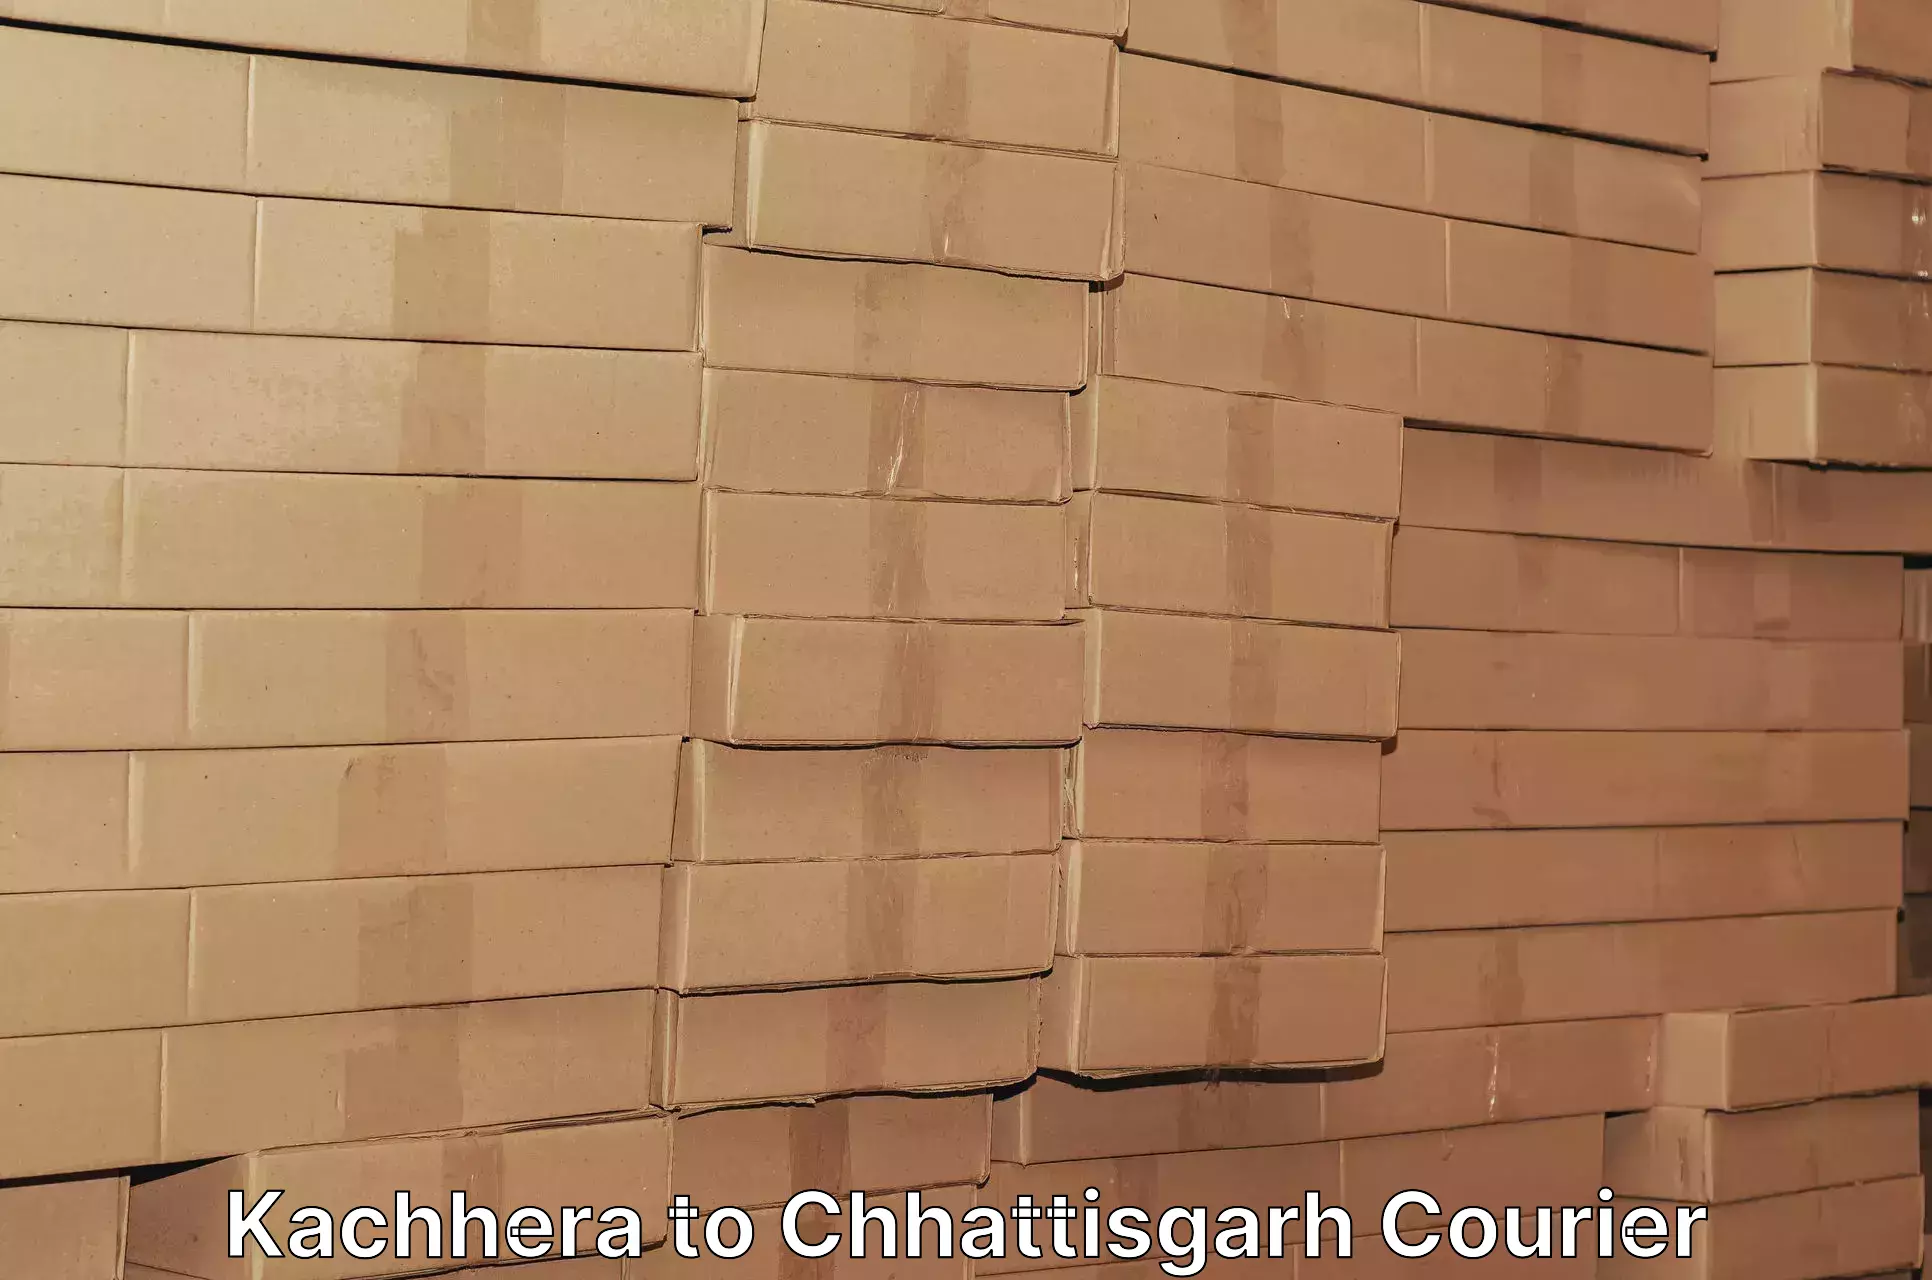 Reliable courier services in Kachhera to Chhattisgarh